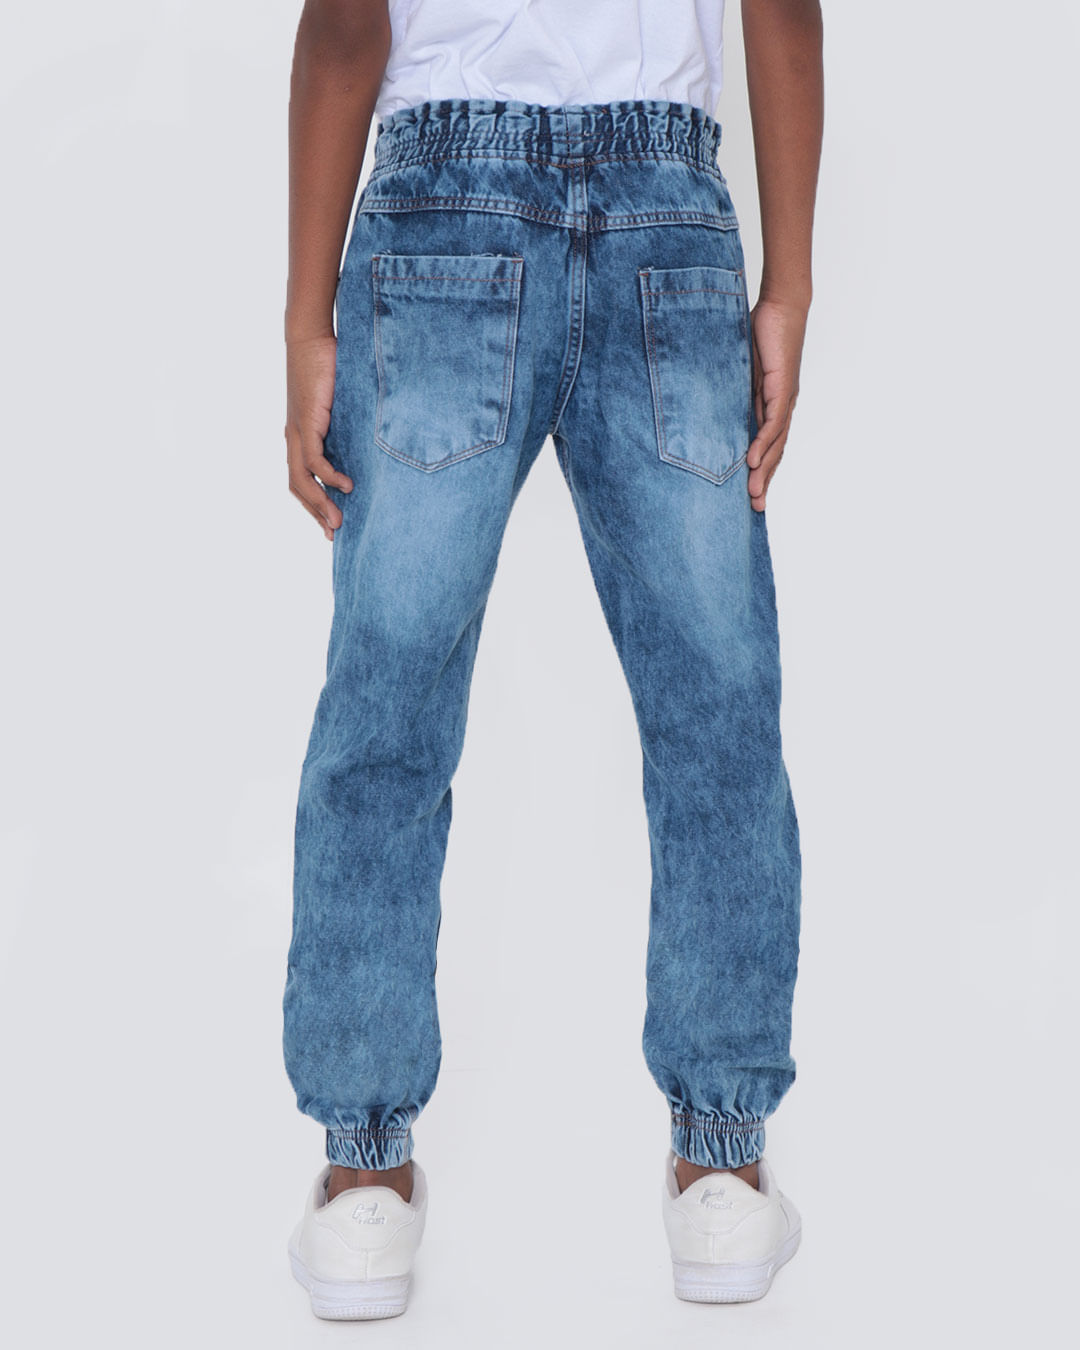 39821000162045-blue-jeans-medio-3